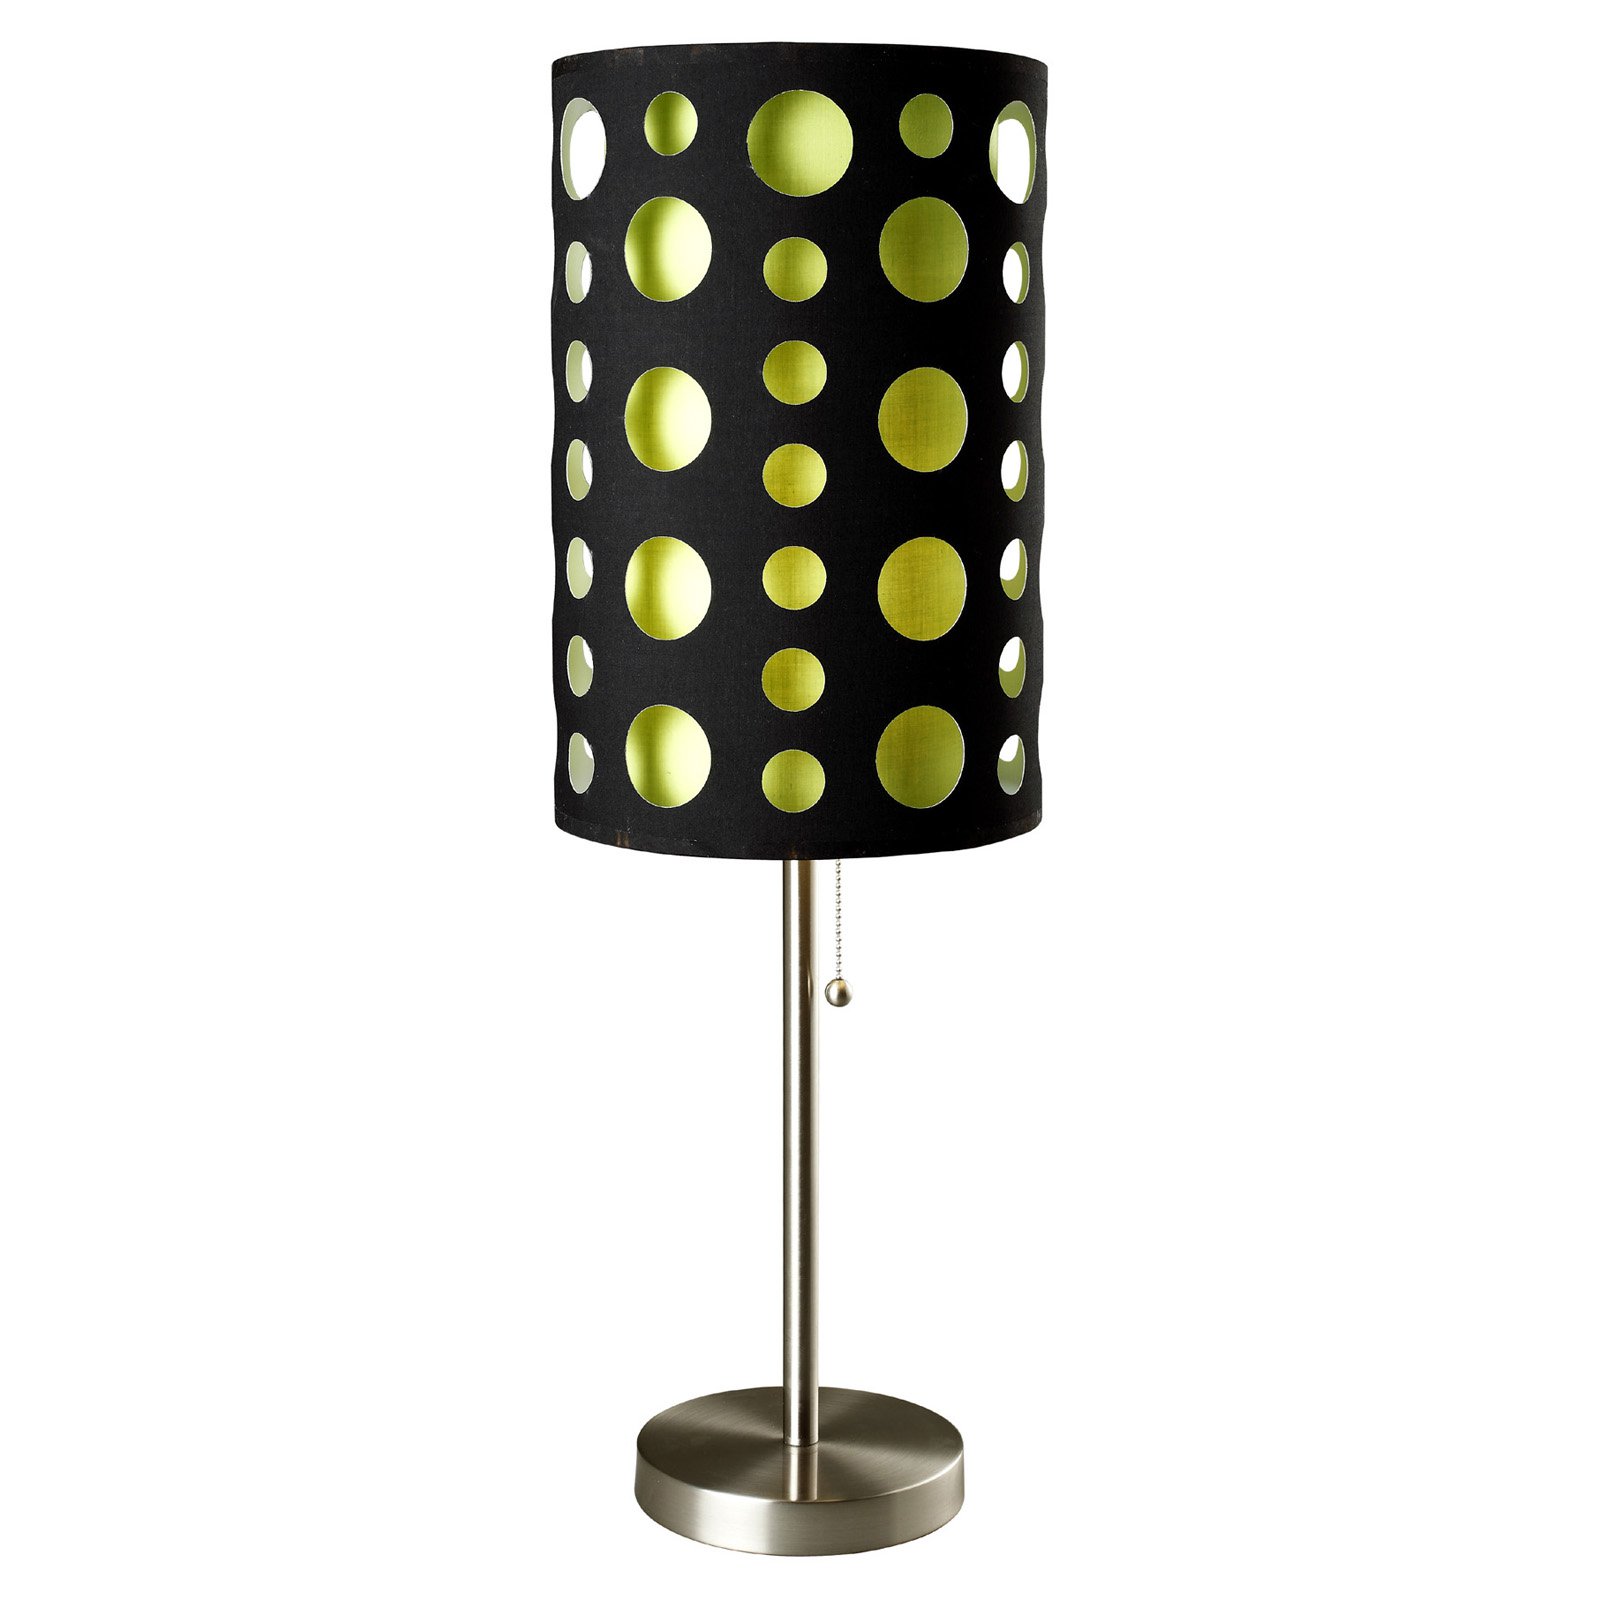 Ore International Inc. Modern Retro Table Lamp - image 2 of 2